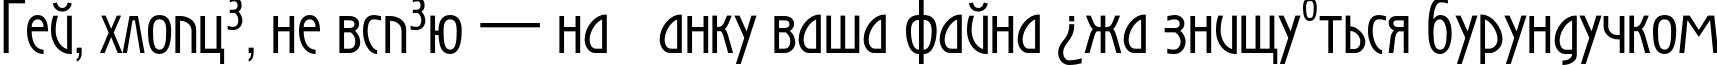 Пример написания шрифтом Secession текста на украинском